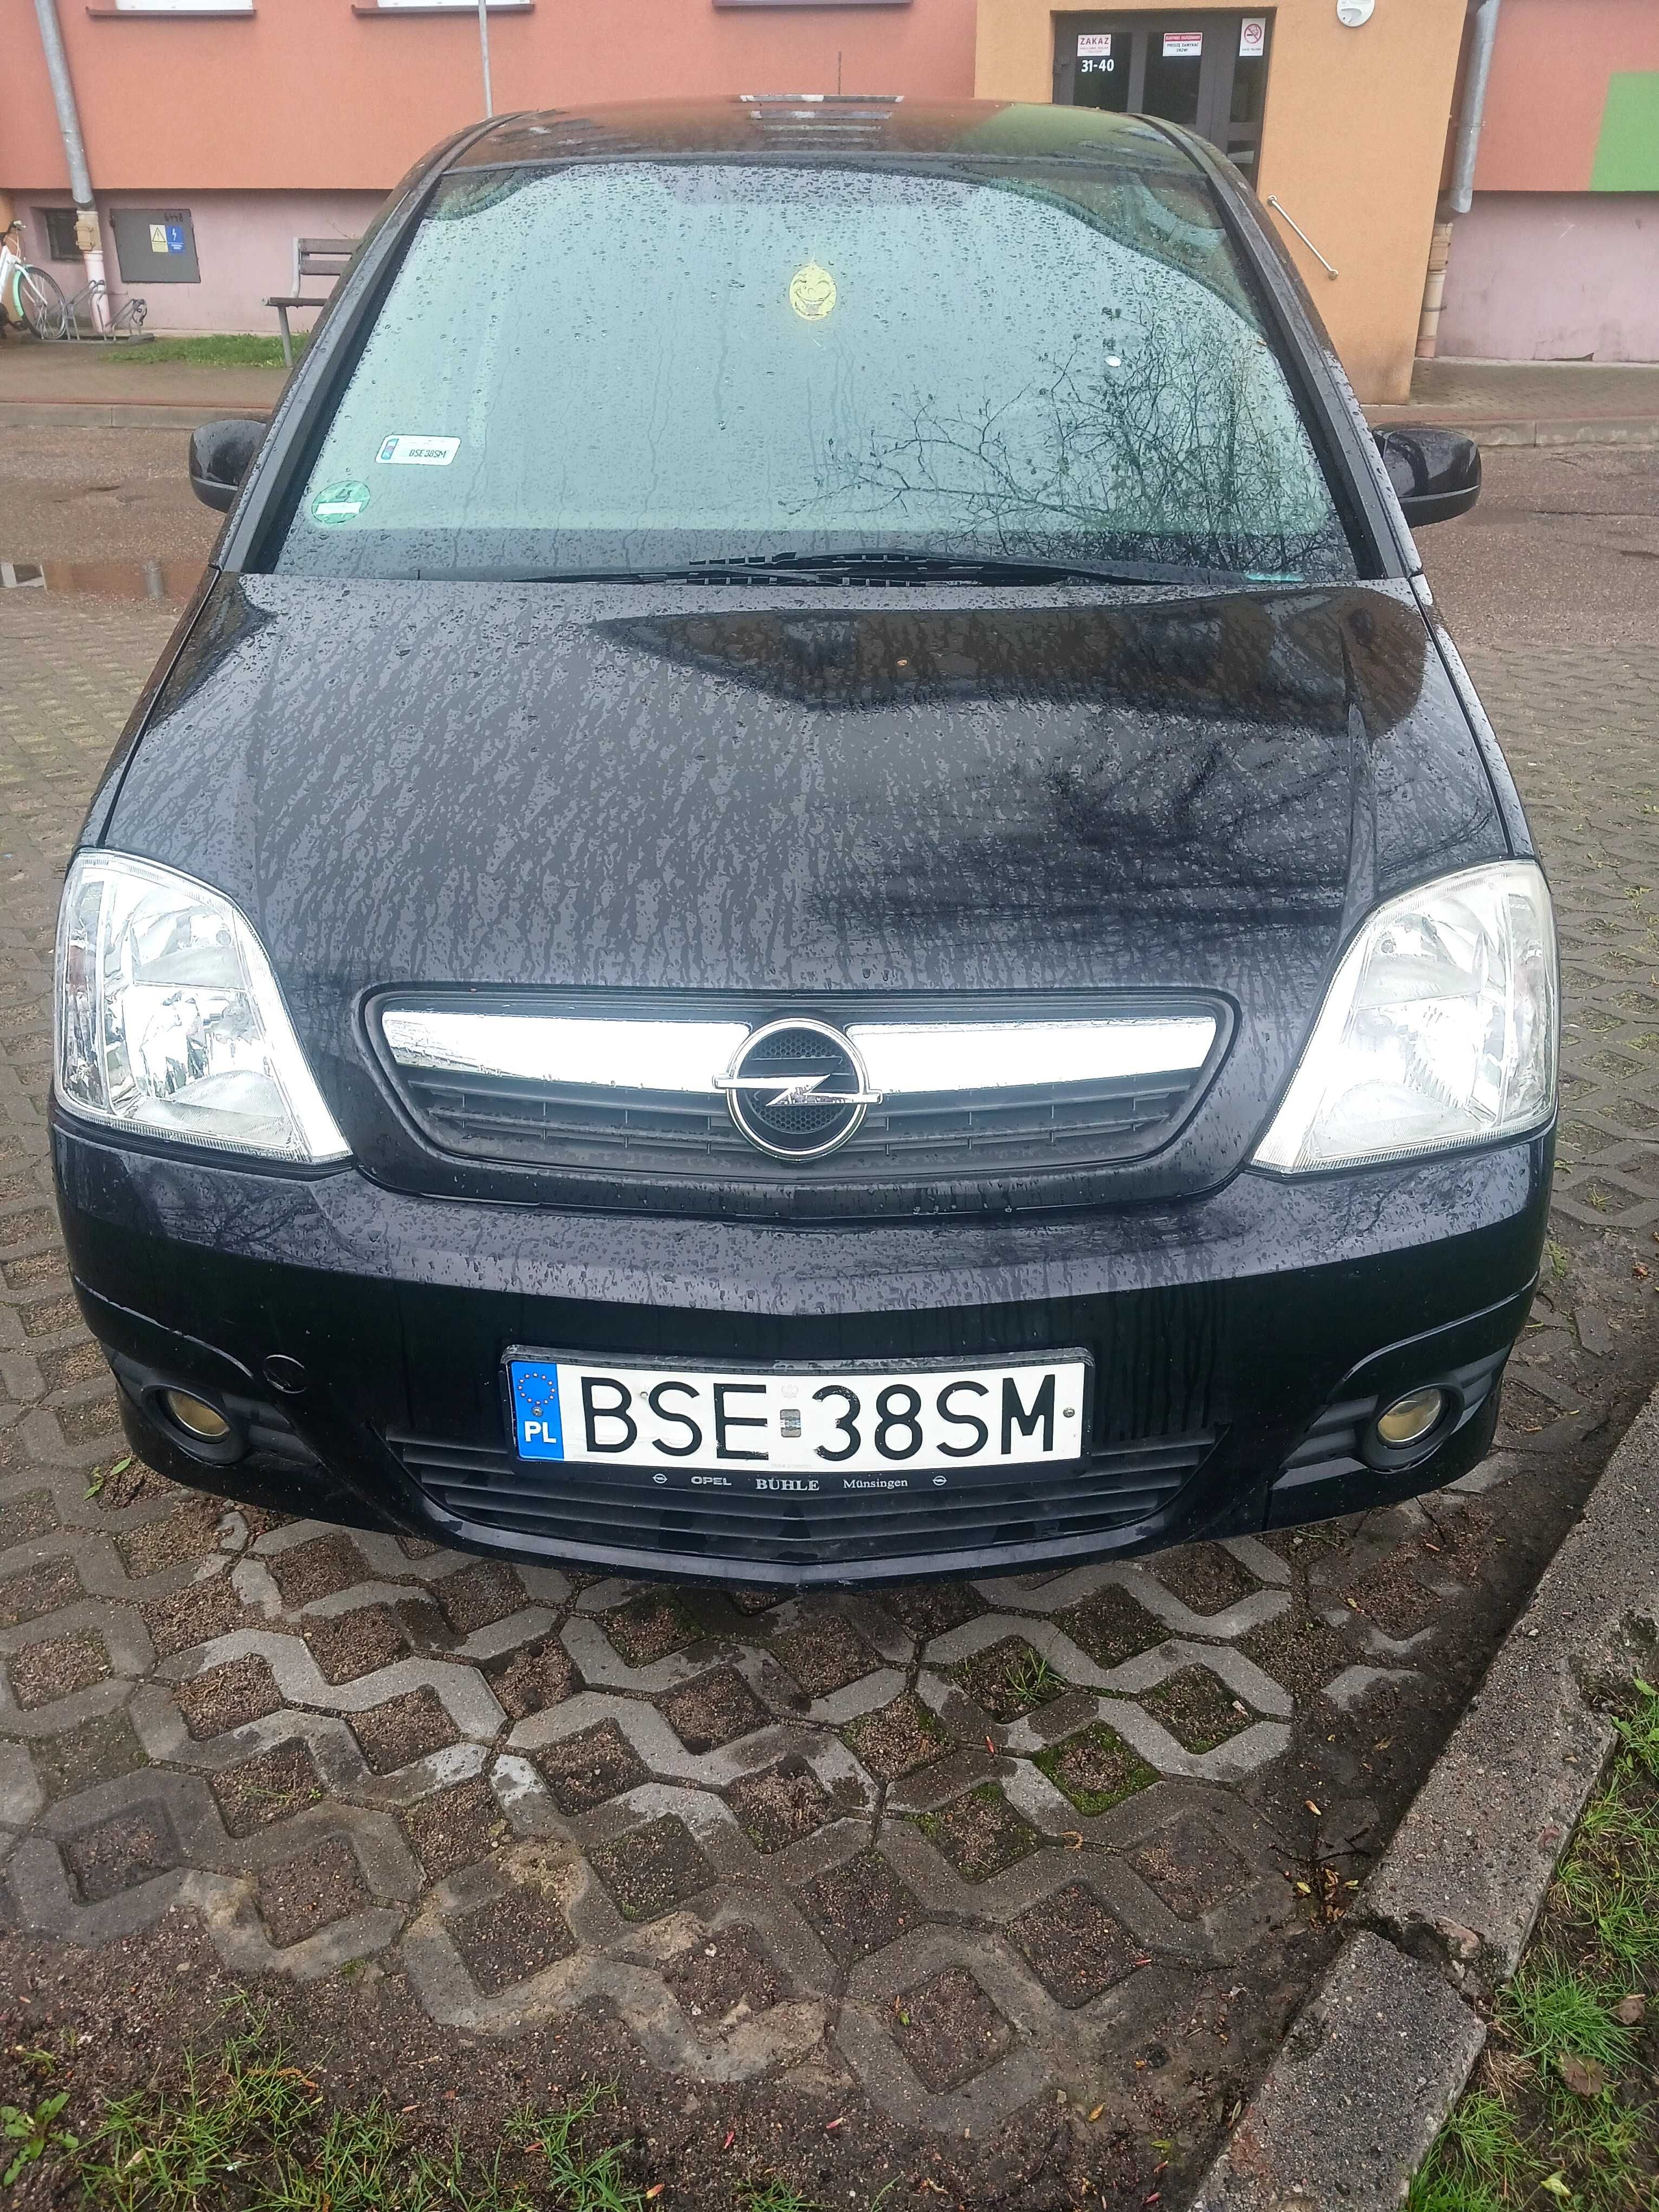 Opel Meriva 2007 (uszkodzony silnik)